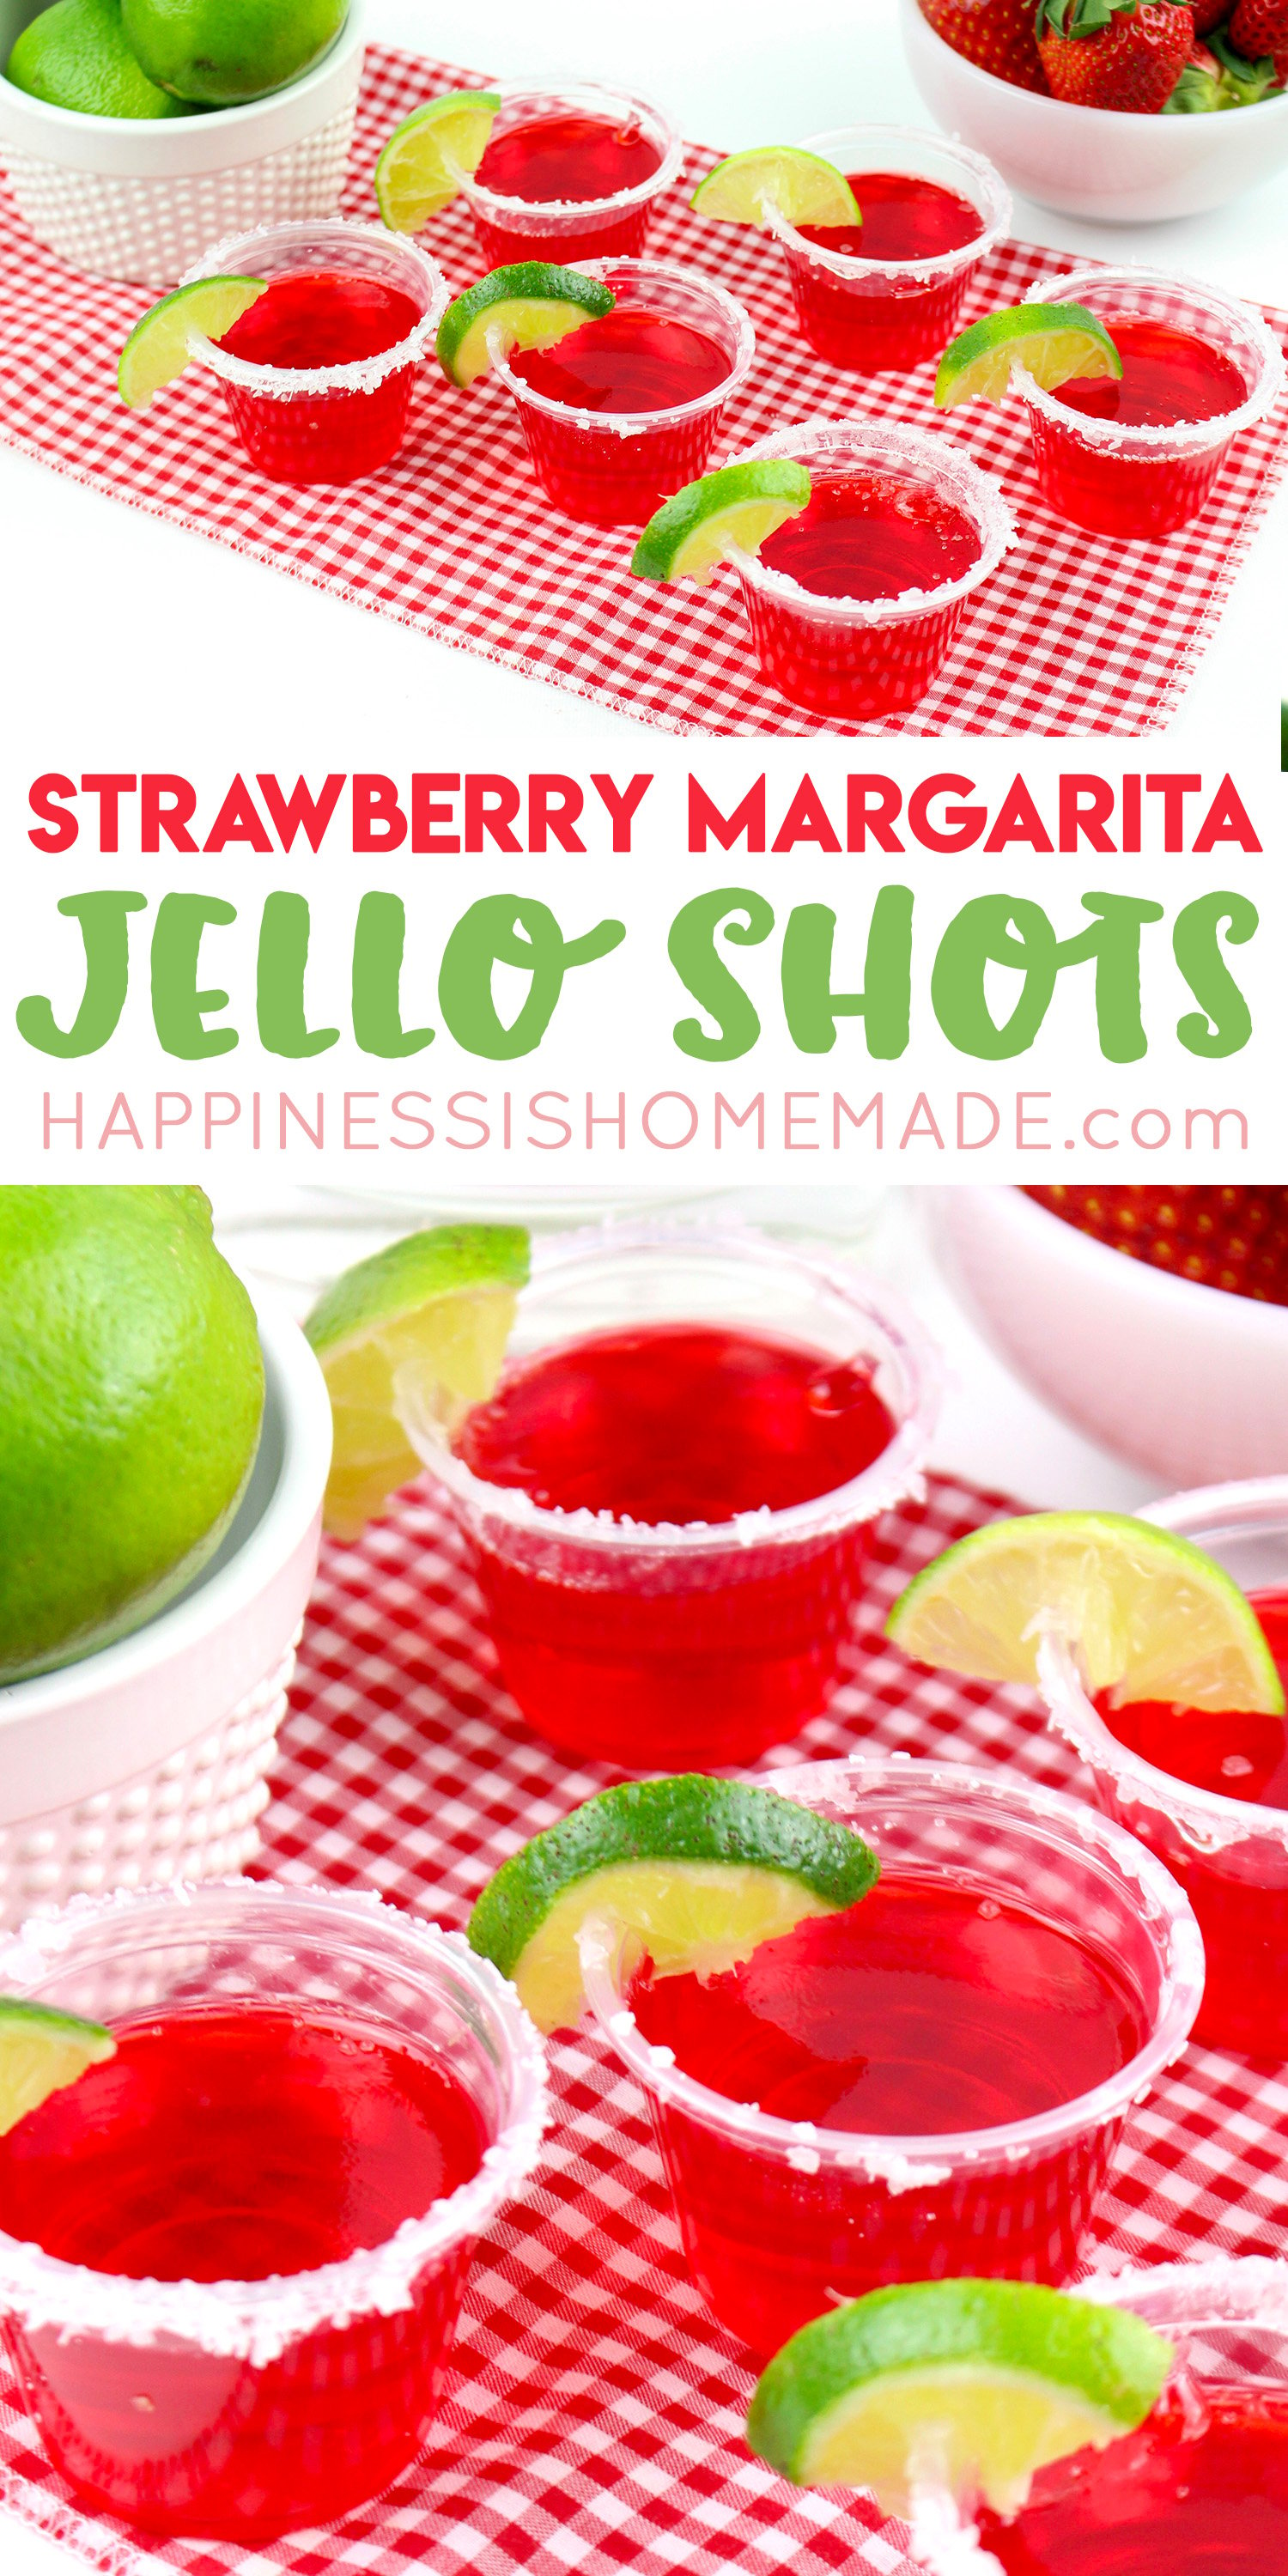 How to make strawberry margarita jello shots